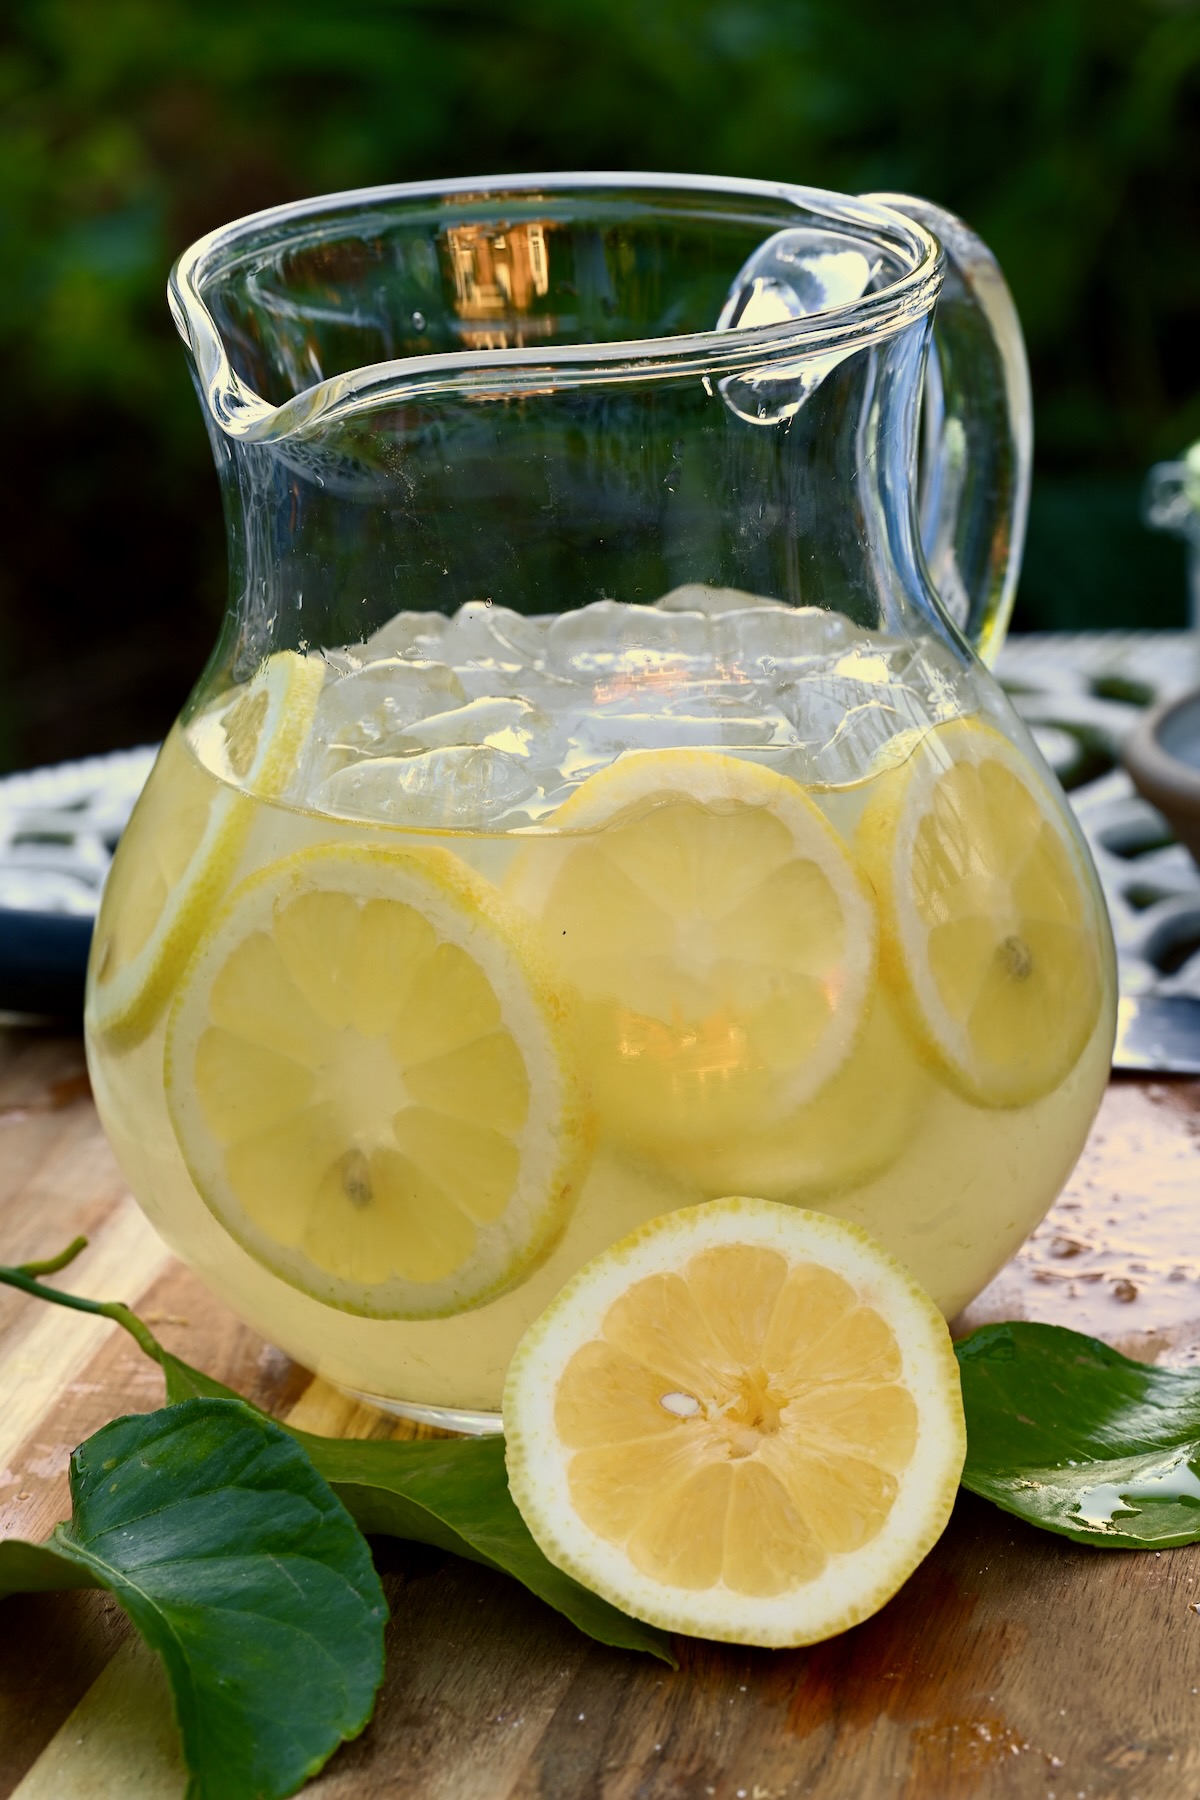 A jug with lemon slices and homemade lemonade